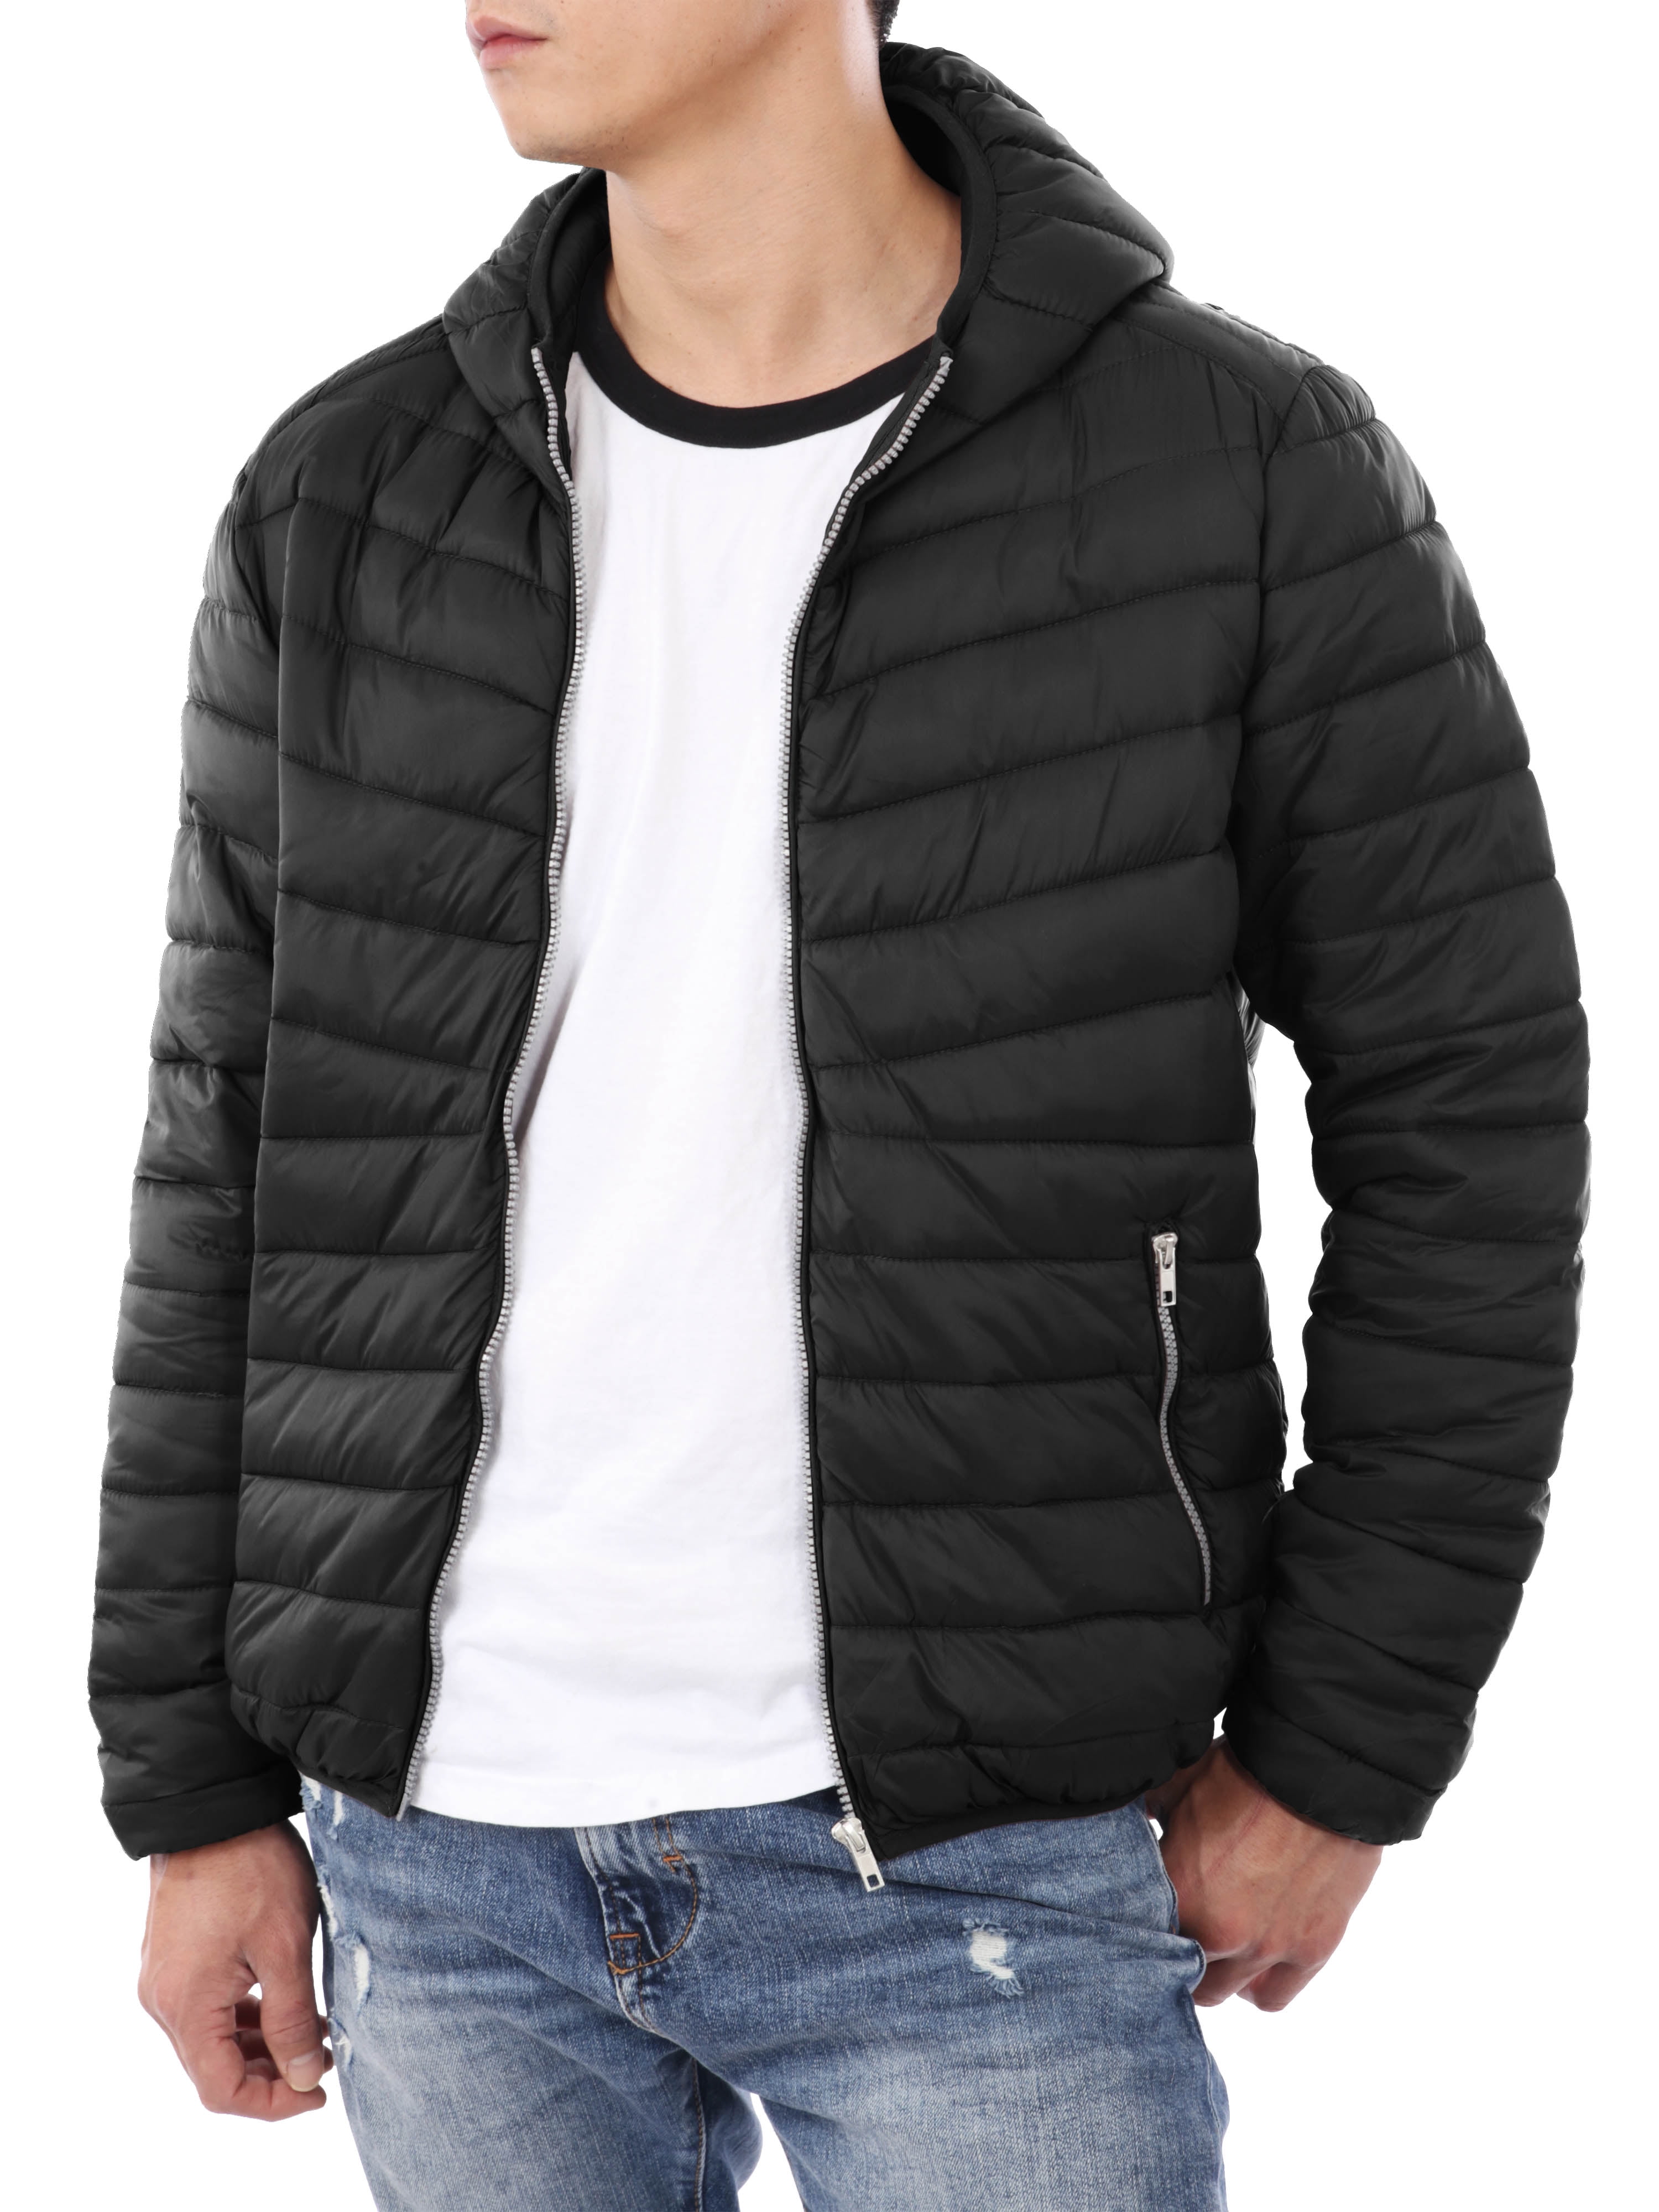 Ultralight Hoodie Down Men's Packable Jacket Winter Hooded Puffer Outerwear Coat